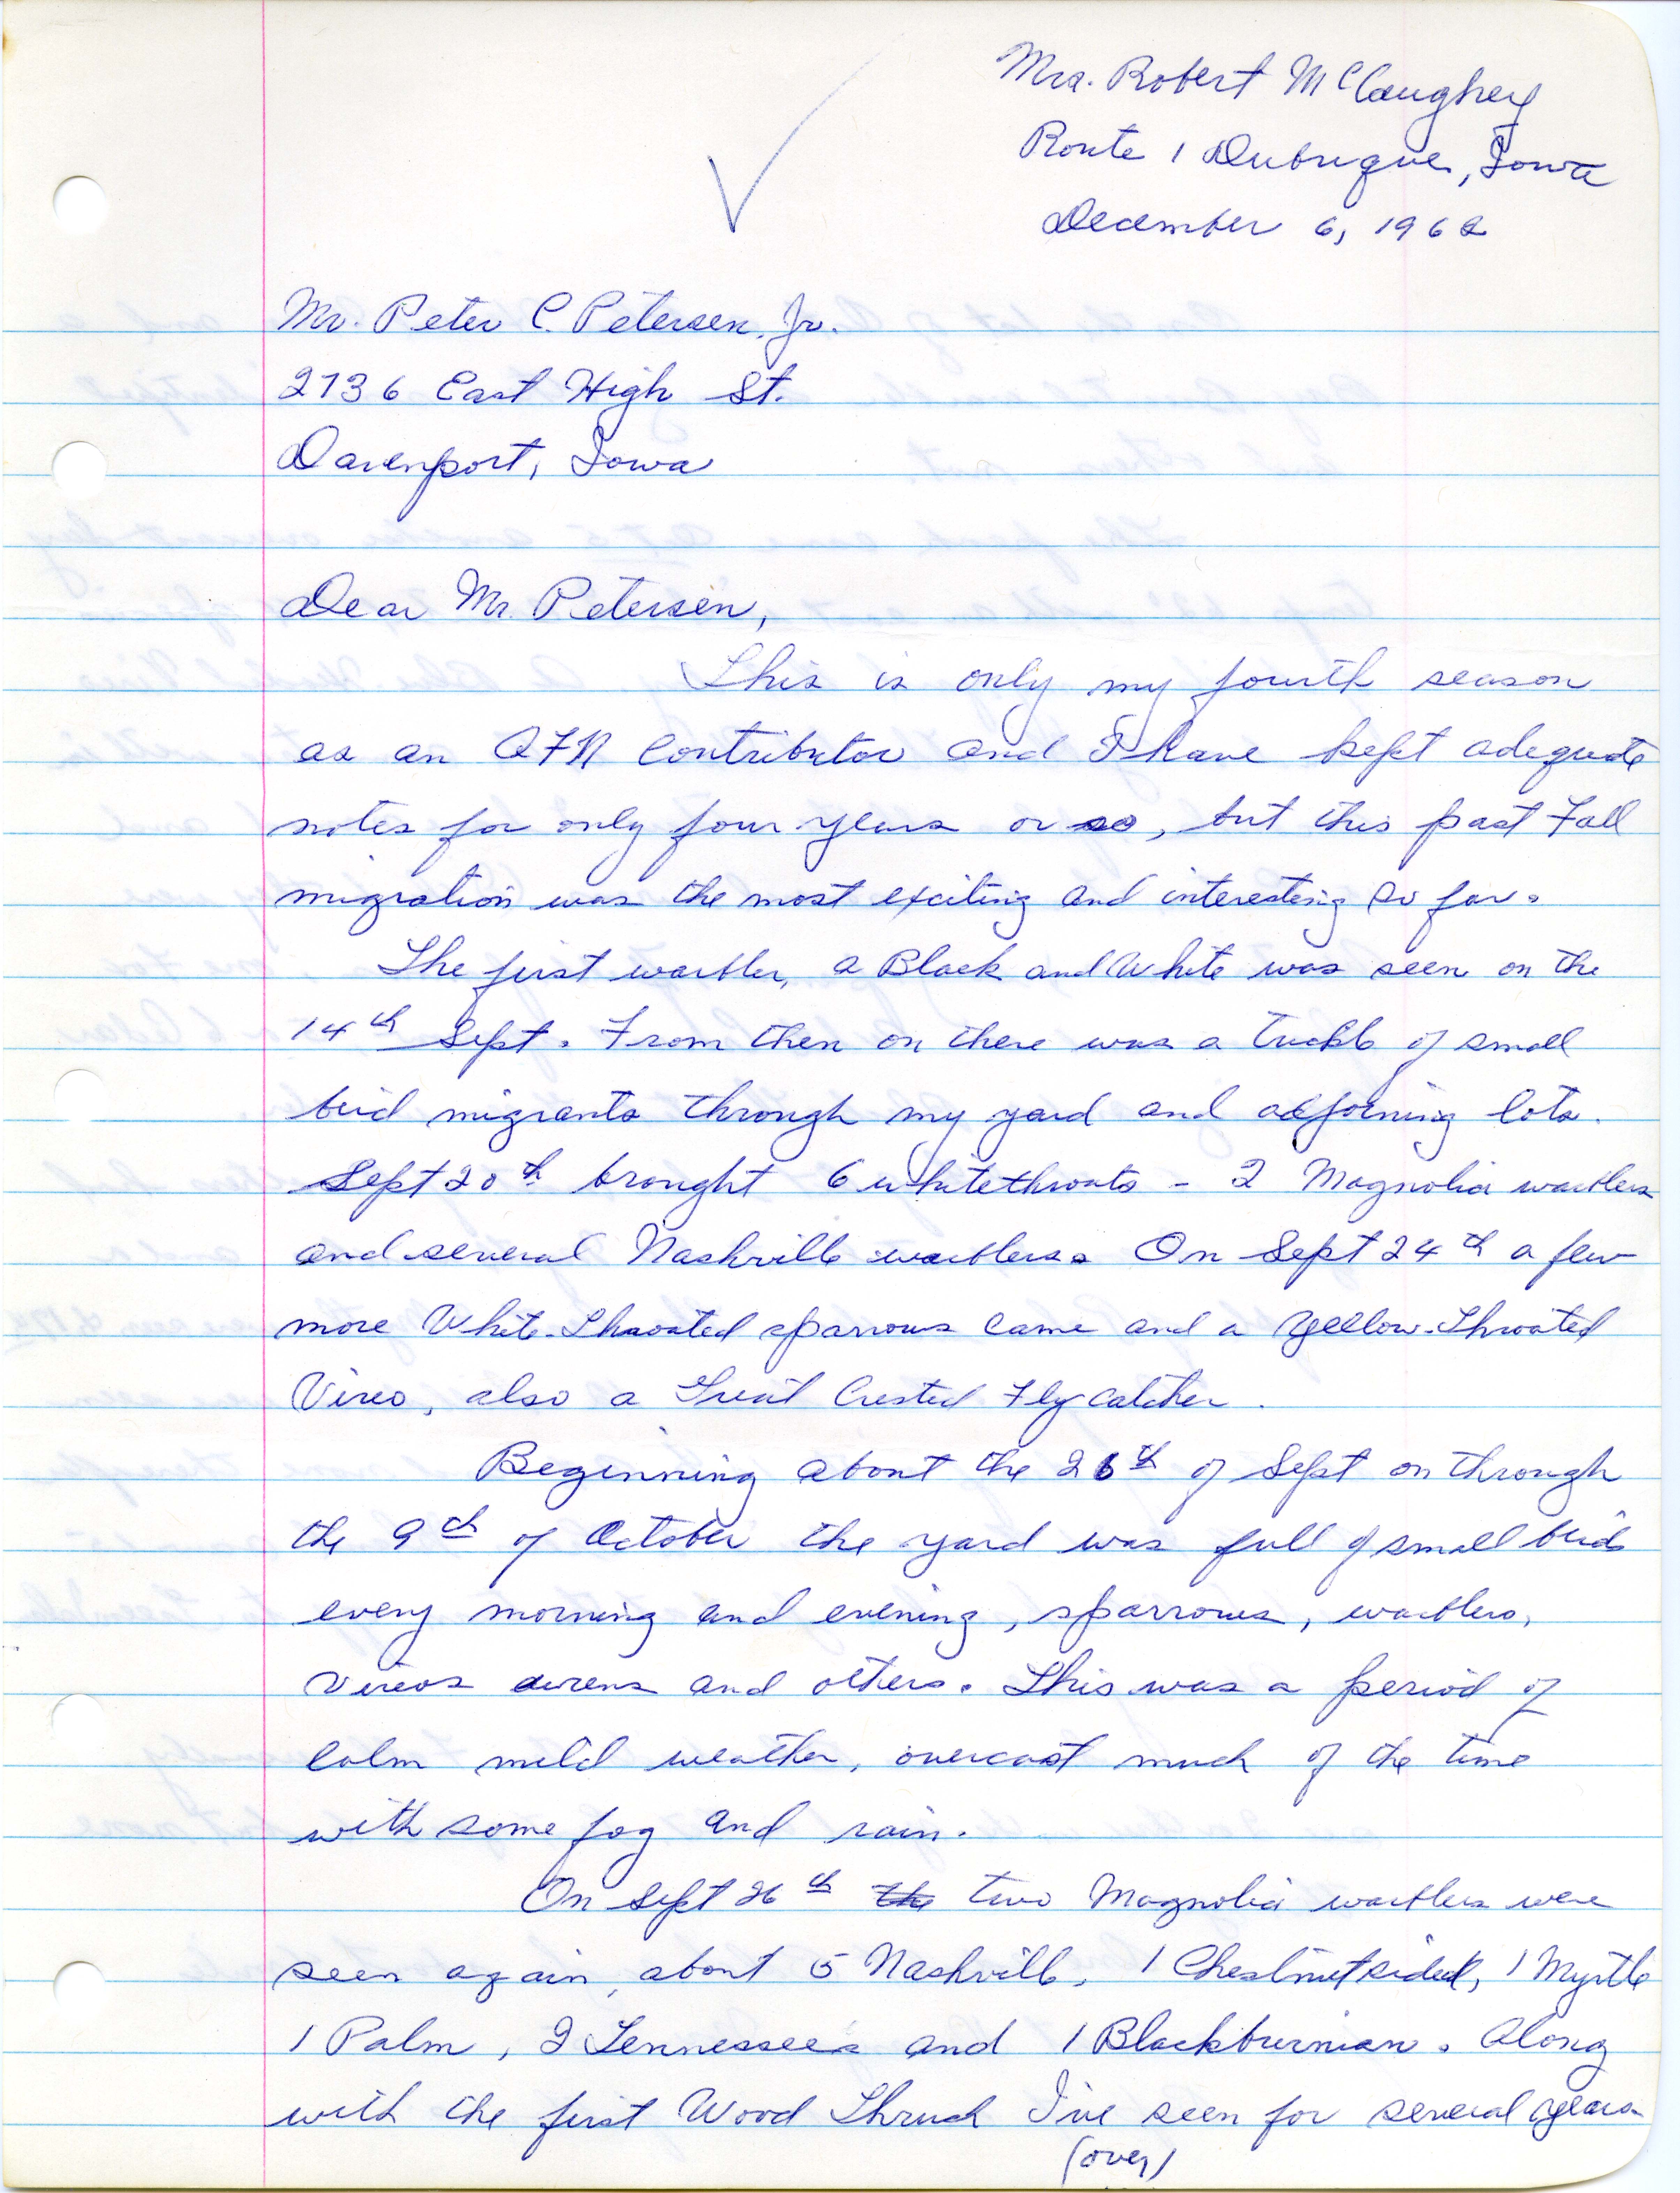 Florence McCaughey letter to Peter C. Petersen regarding 1962 fall migration report, December 6, 1962